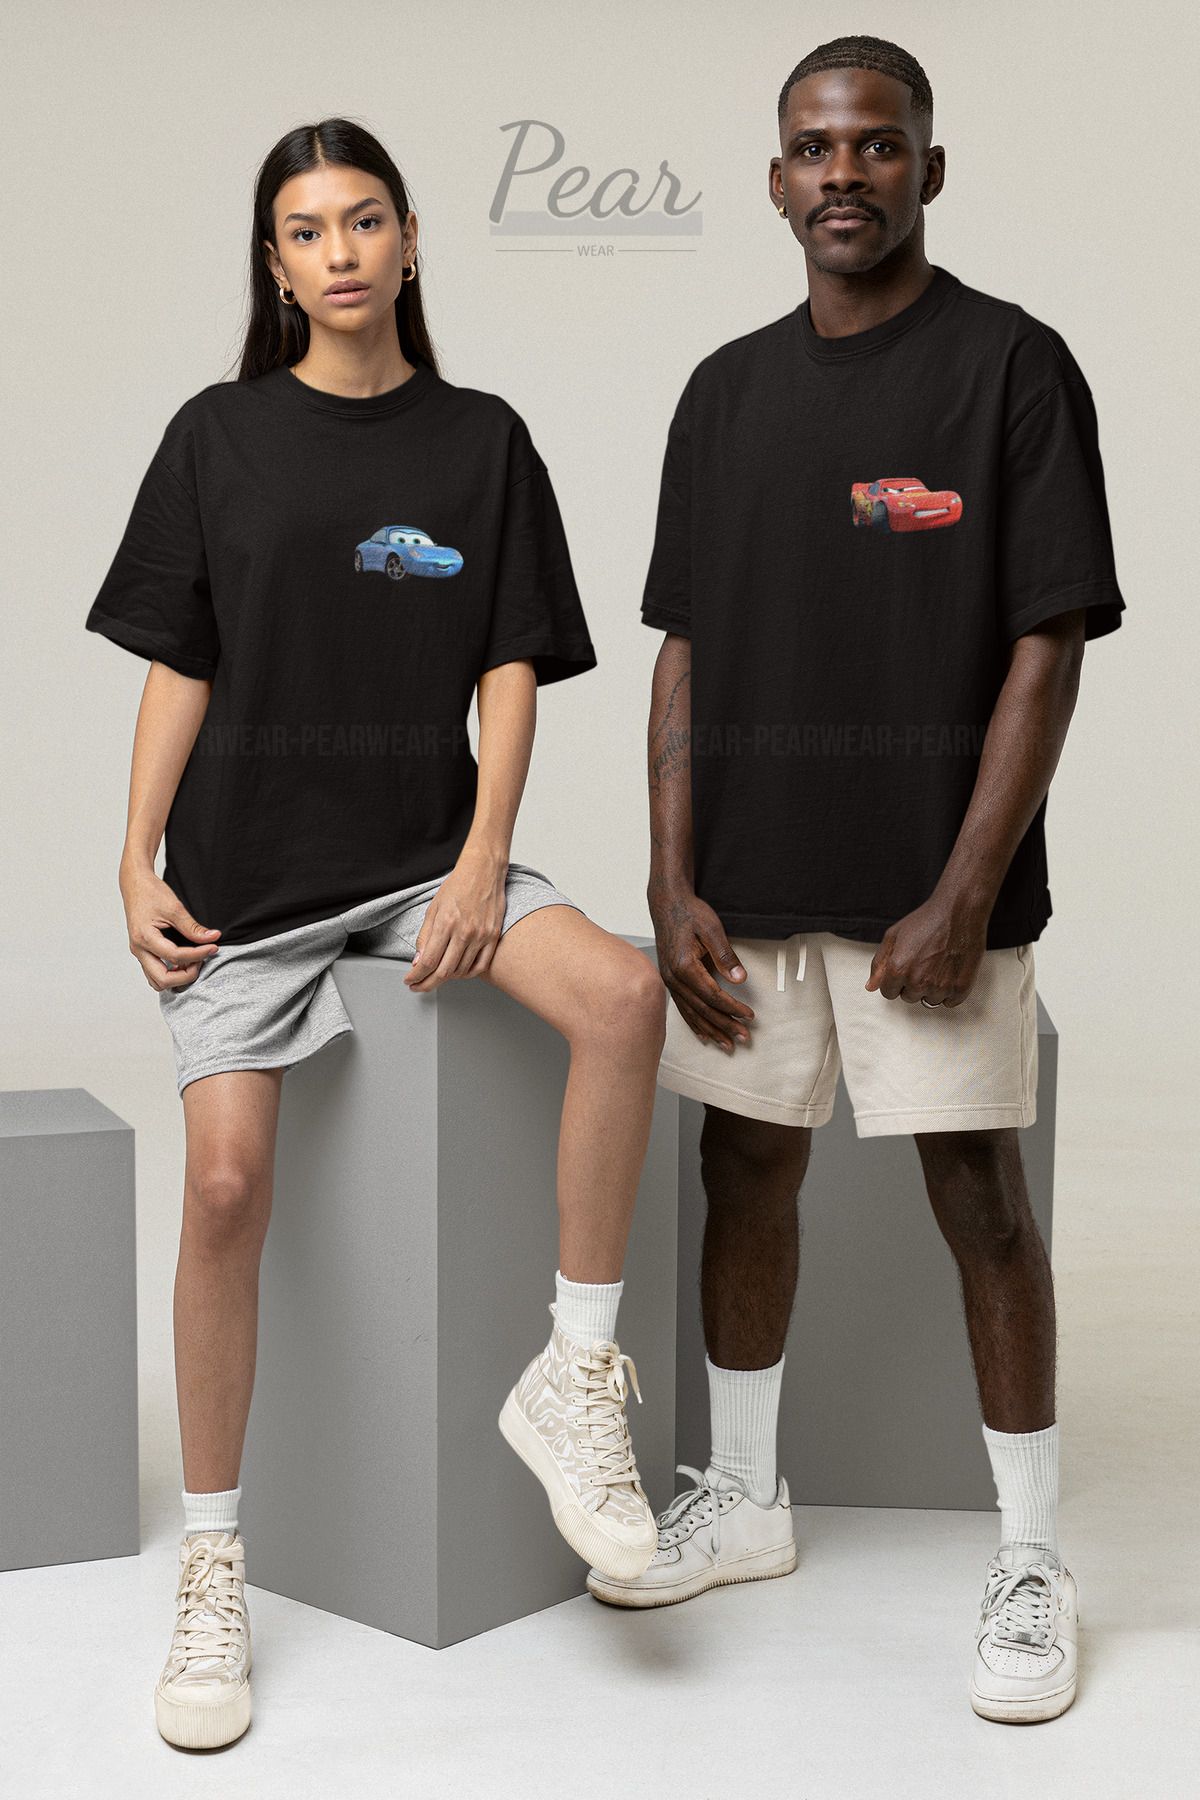 Pear Wear Sally & Mcqueen Cars Baskılı 2'li Tişört Sevgili Unisex Çift Oversize T-shirt